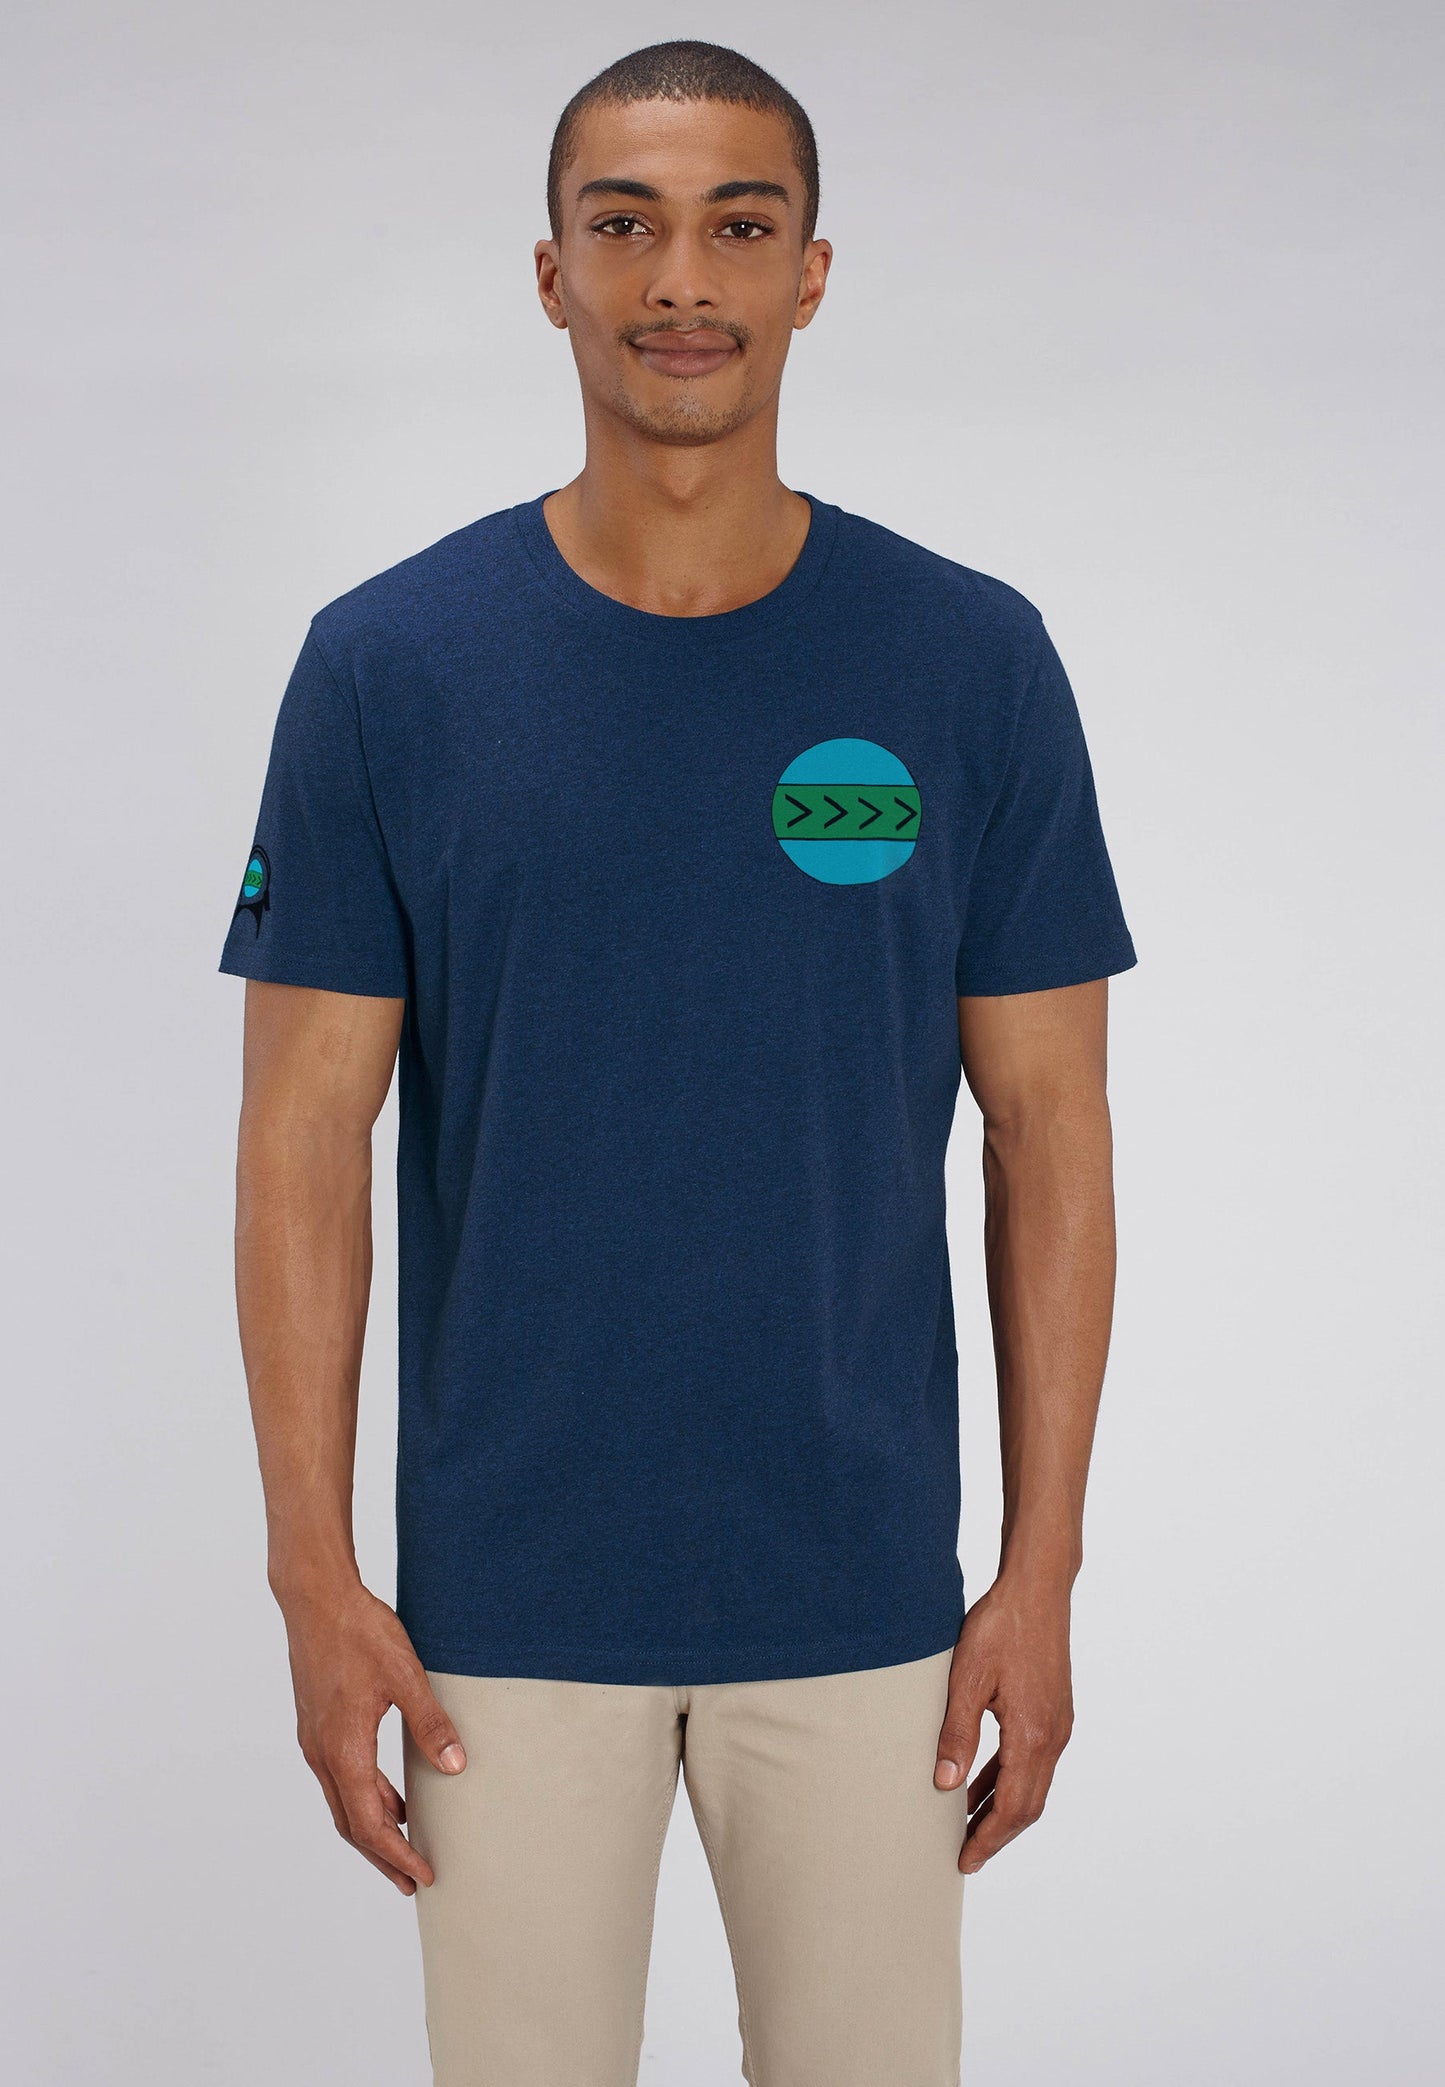 Unisex printed design tshirt Capra Afrozan - organic cotton